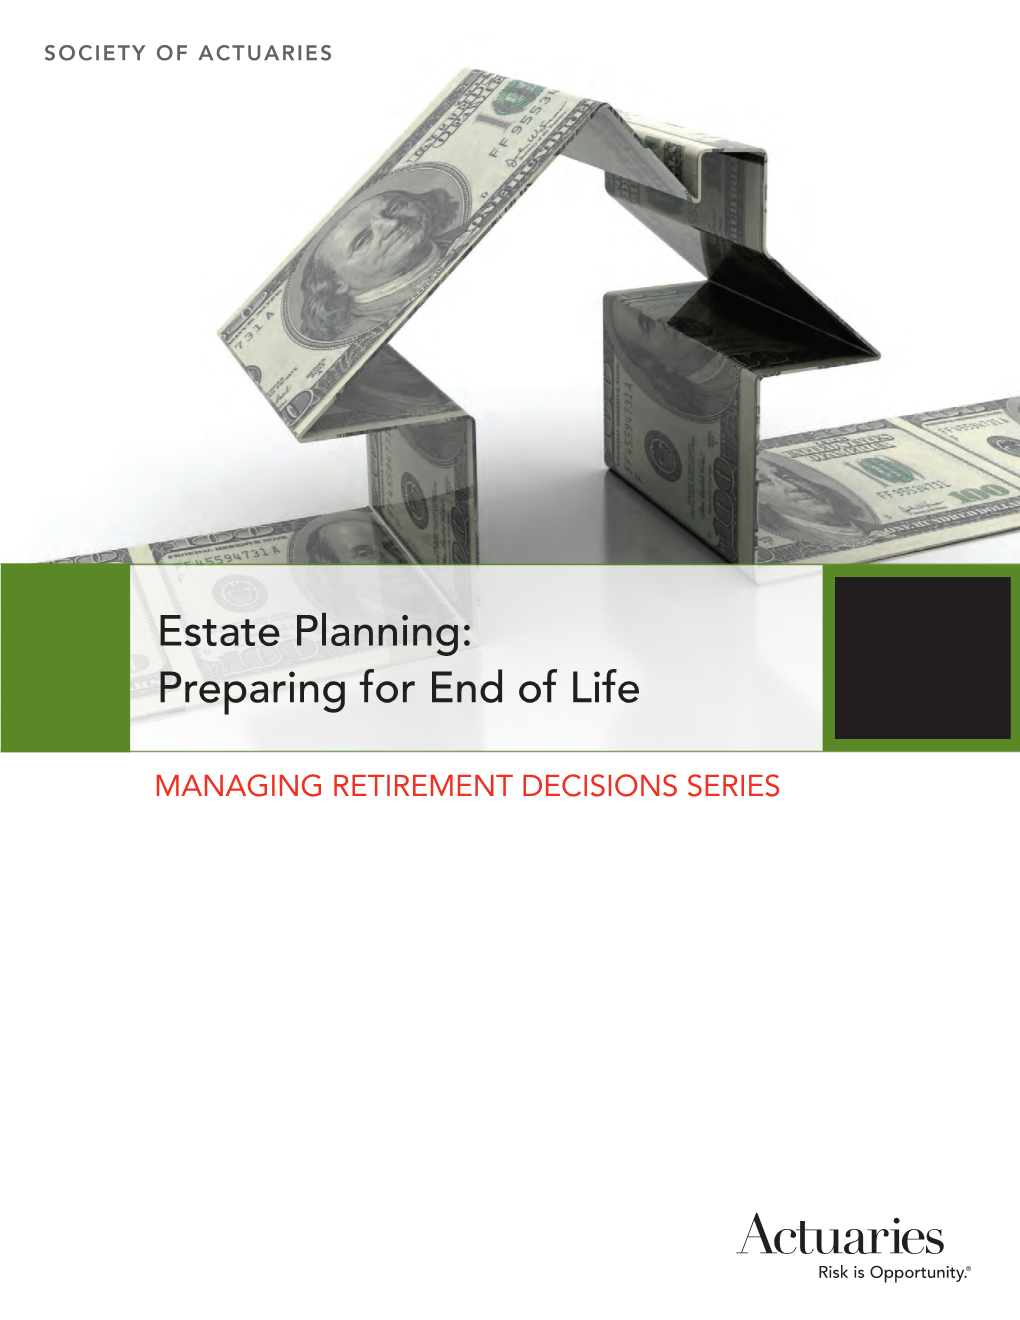 Estate Planning: Preparing for End of Life